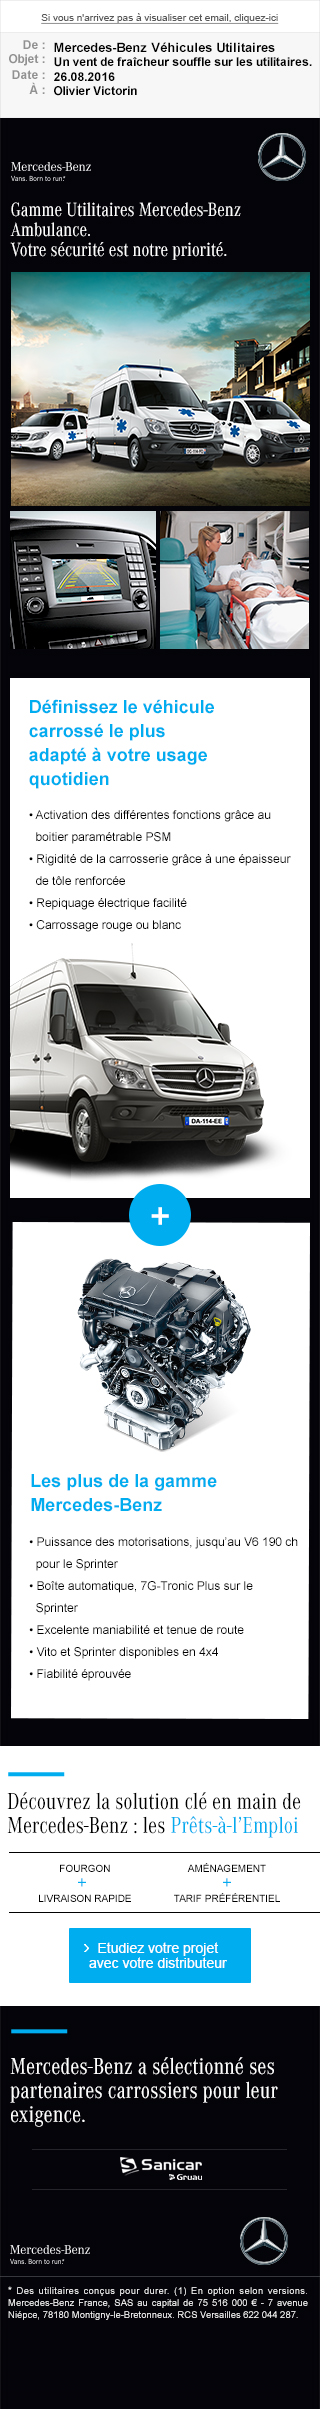 Mercedes Benz Newsletter mobile #4